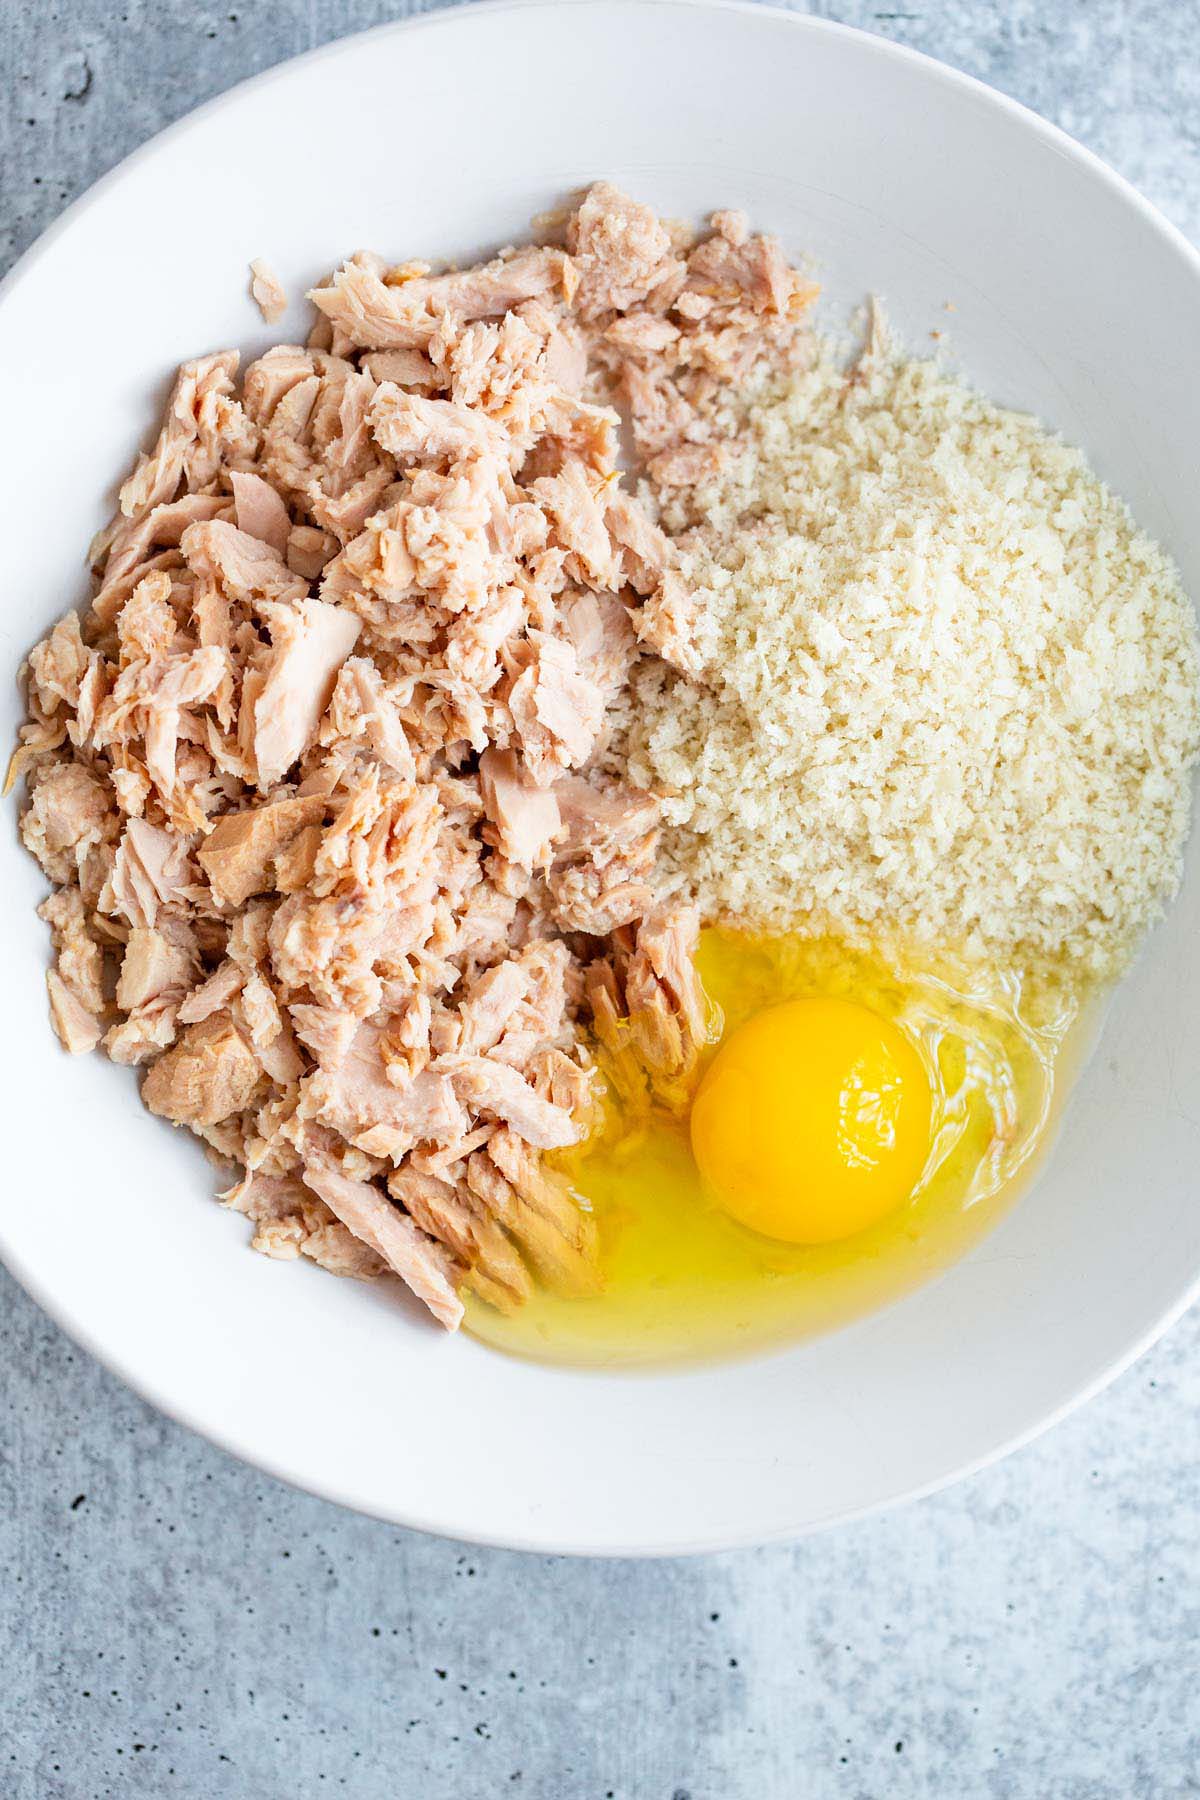 Tuna, panko, and egg in a bowl.